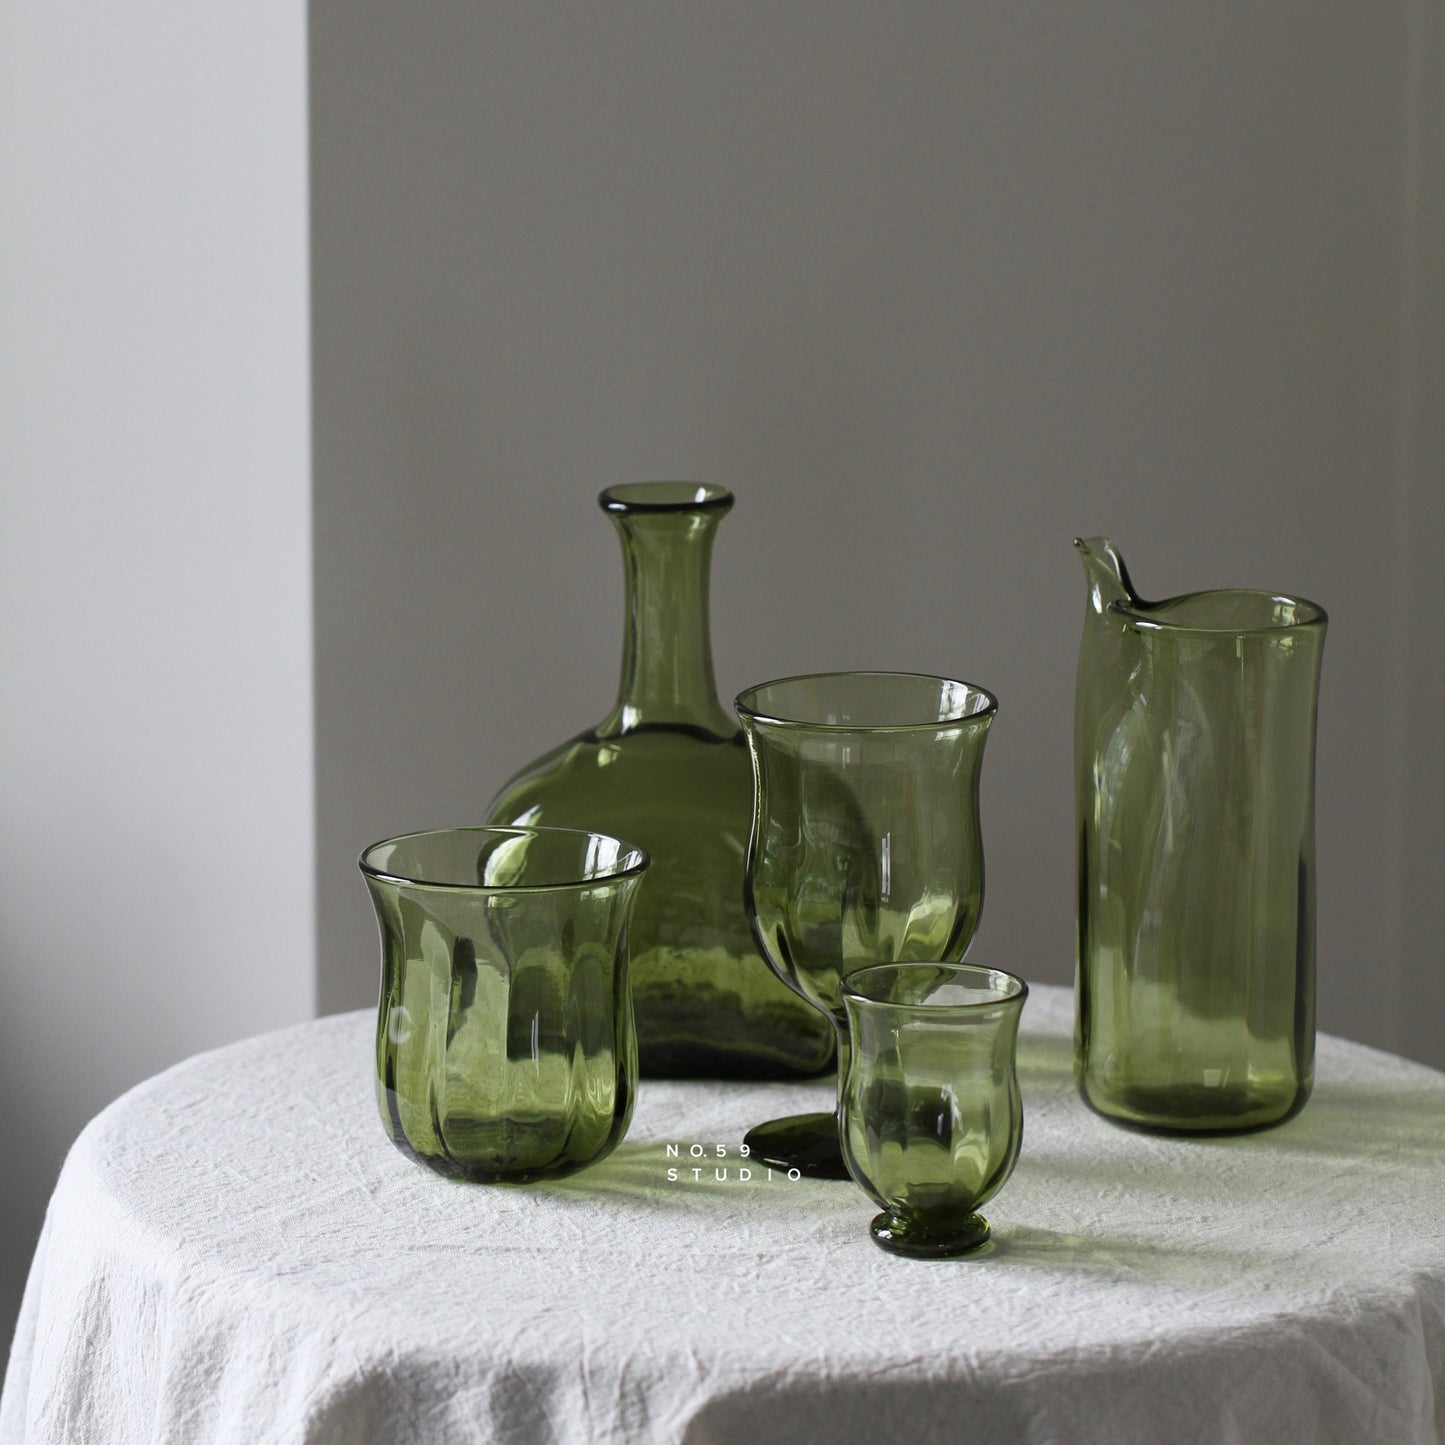 Tsugaru Vidro Heritage Collection Vase